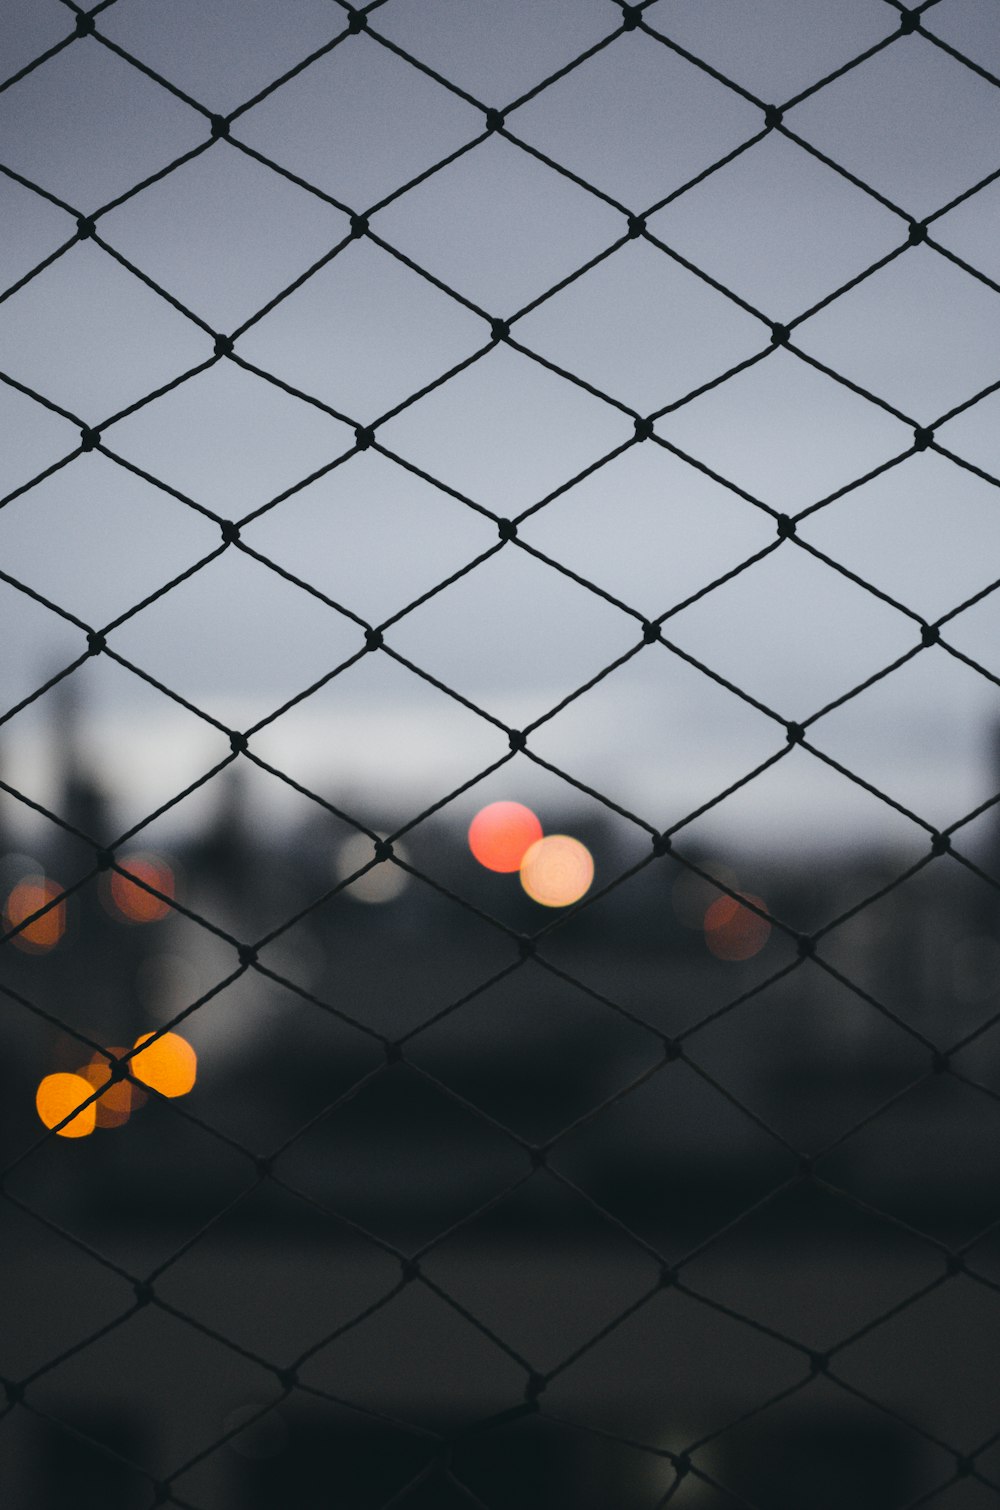 grey metal fence with orange light